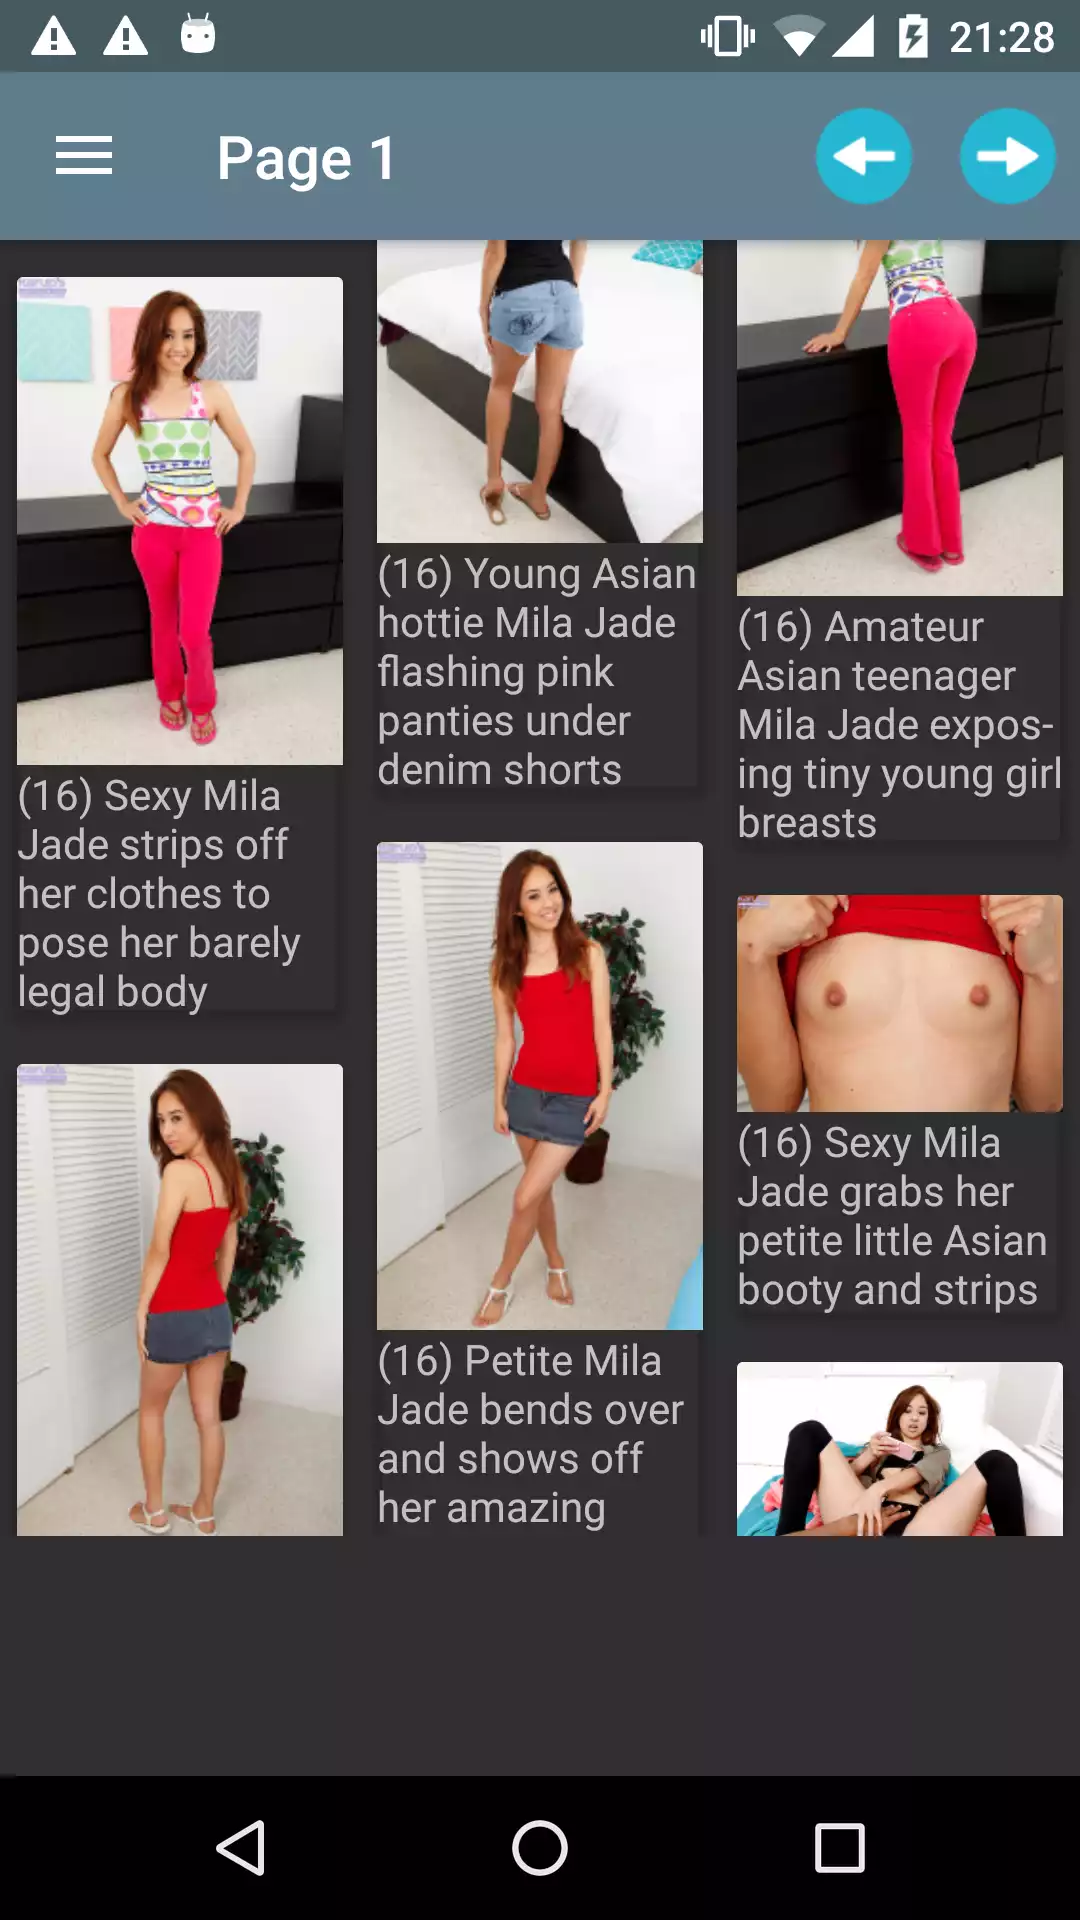 Mila Jade download,apk,app,android,apps,porn,anime,hentai,hot,henati,picture,pics,pic,images,pictures,photos,hantai,sexy,sexygalleries,futanari